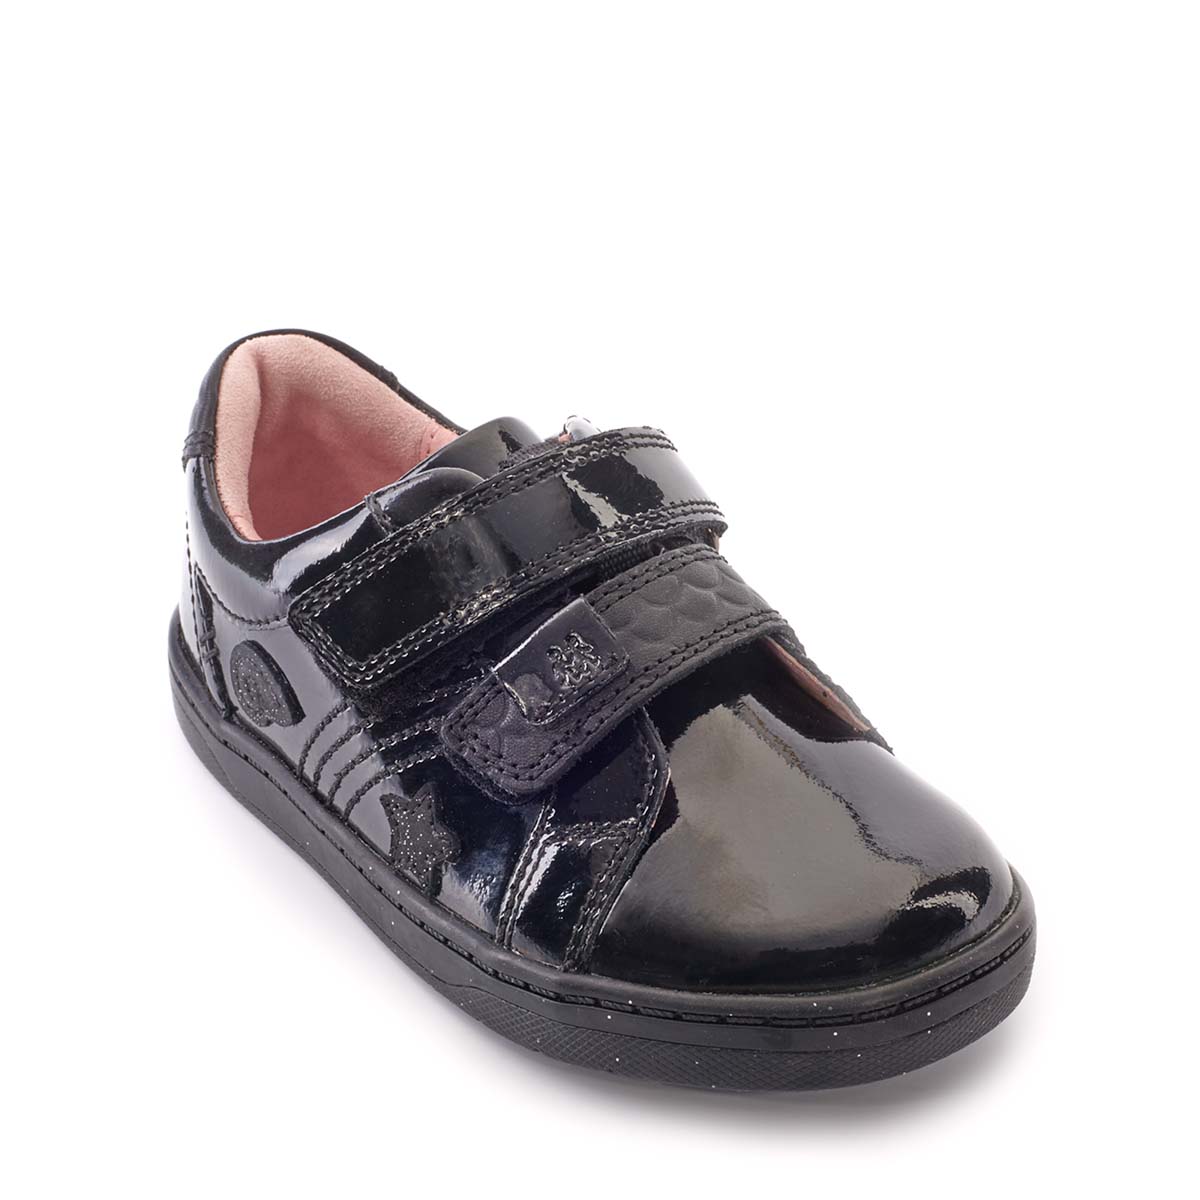 Start Rite - Fantasy In Black Patent 1741-36F In Size 9 In Plain Black Patent For School Girls Shoes  In Black Patent For kids